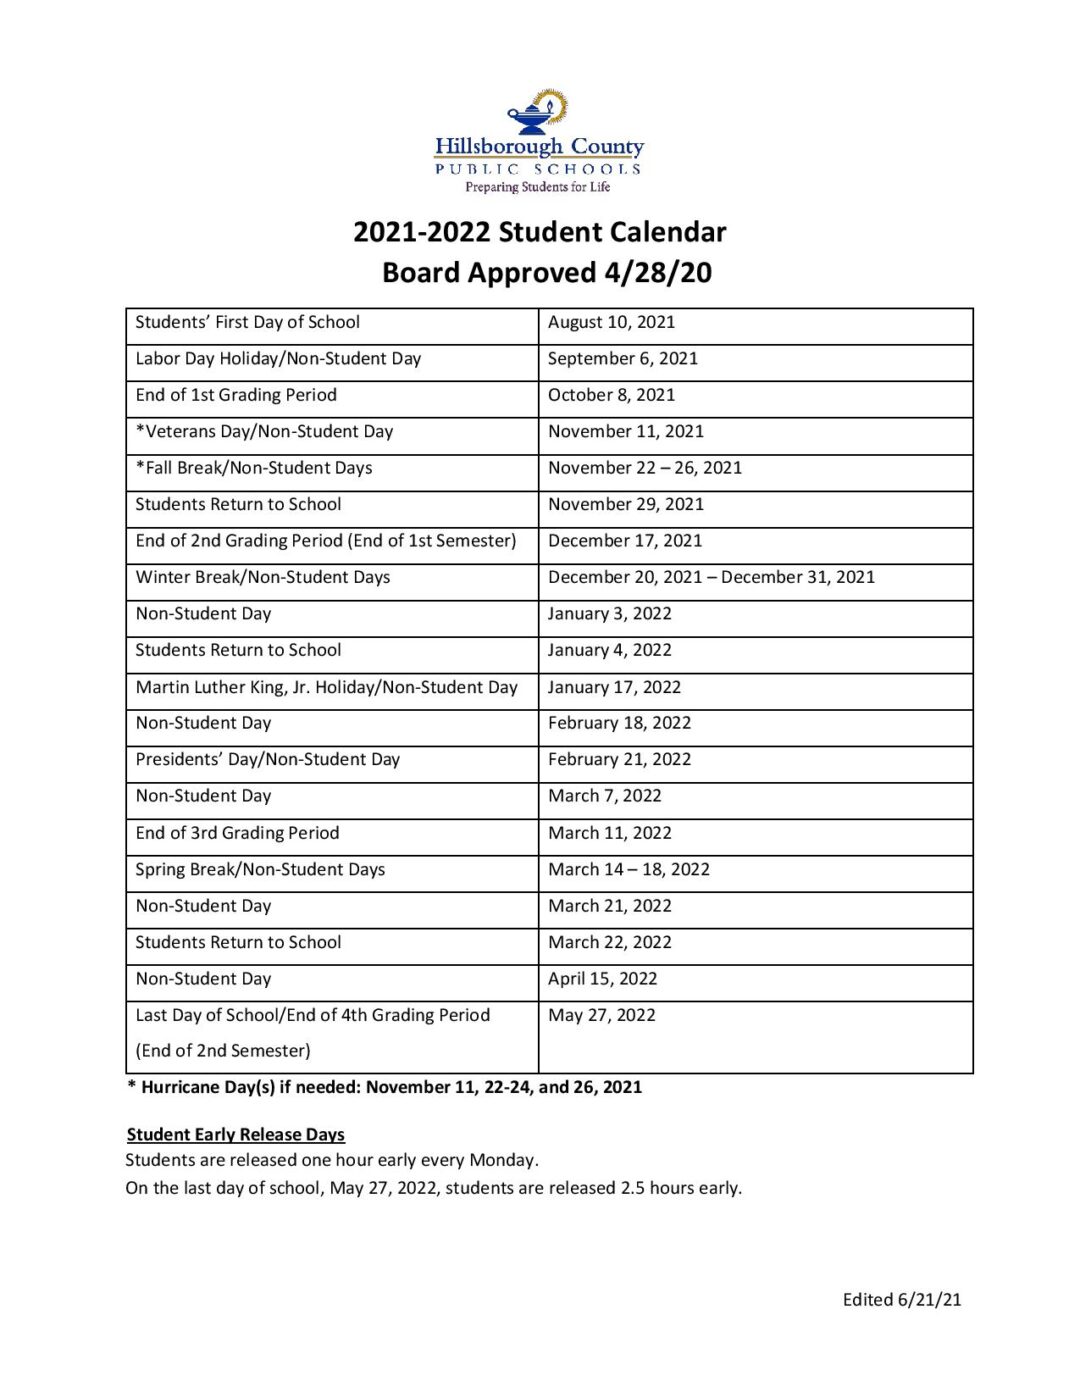 Hillsborough County Public School Calendar 2021 2022